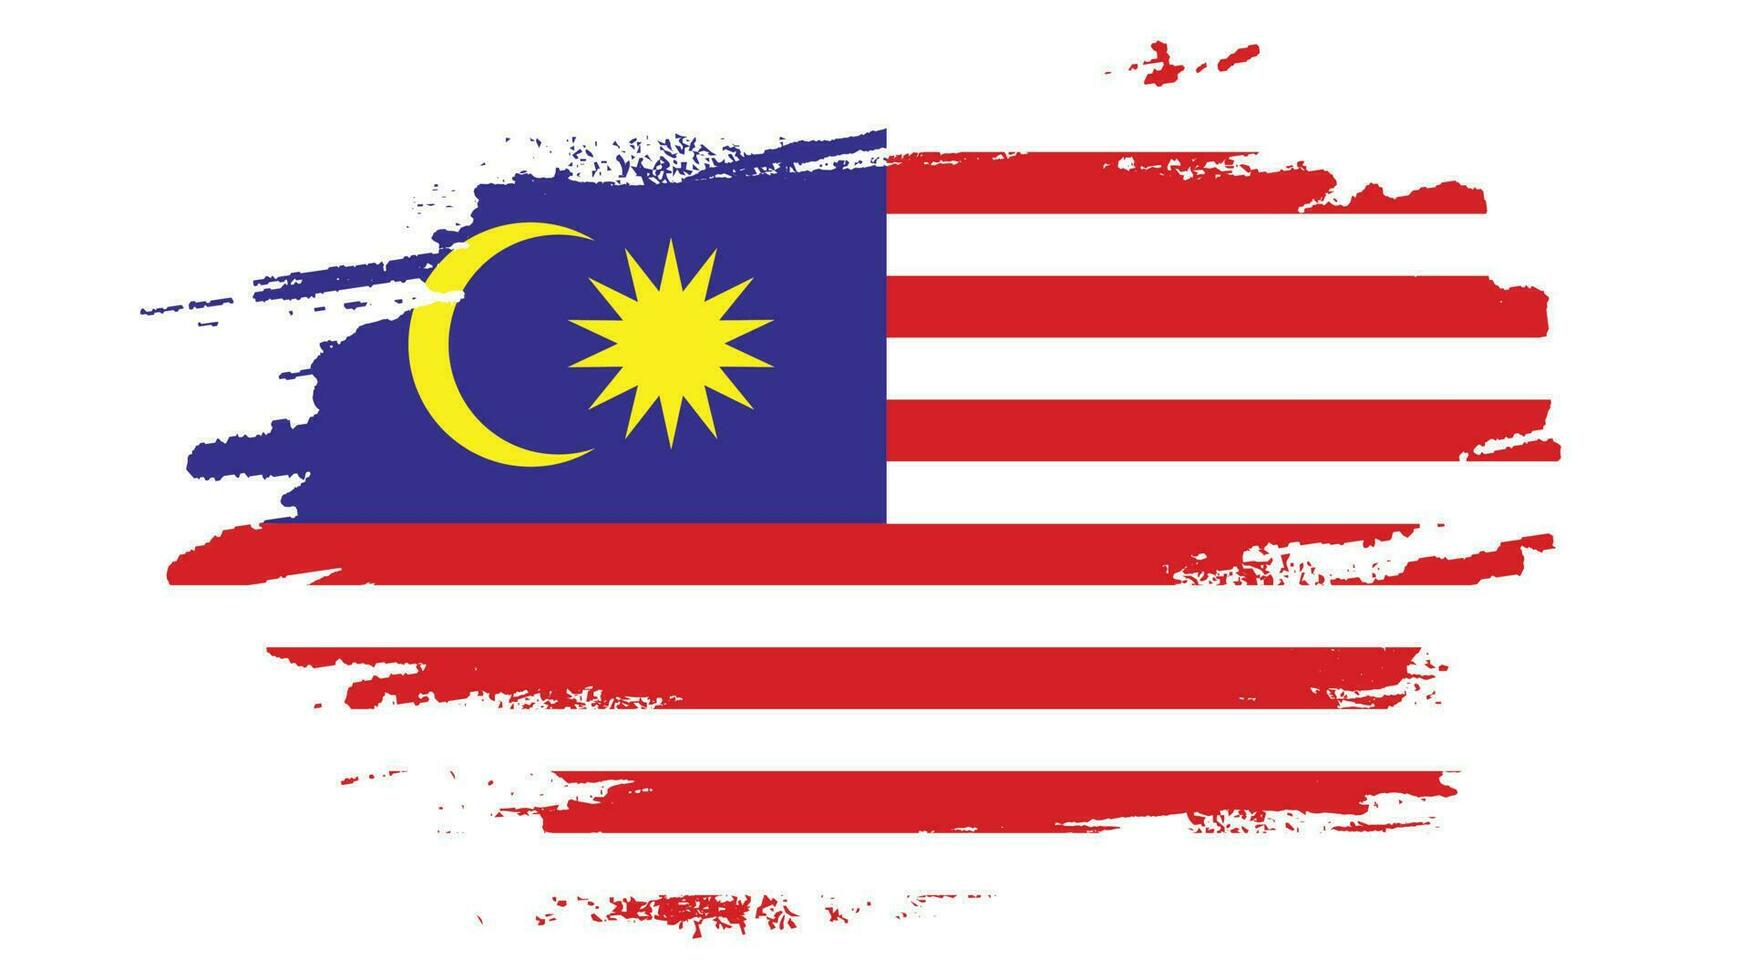 Abstract brush stroke Malaysia flag vector image